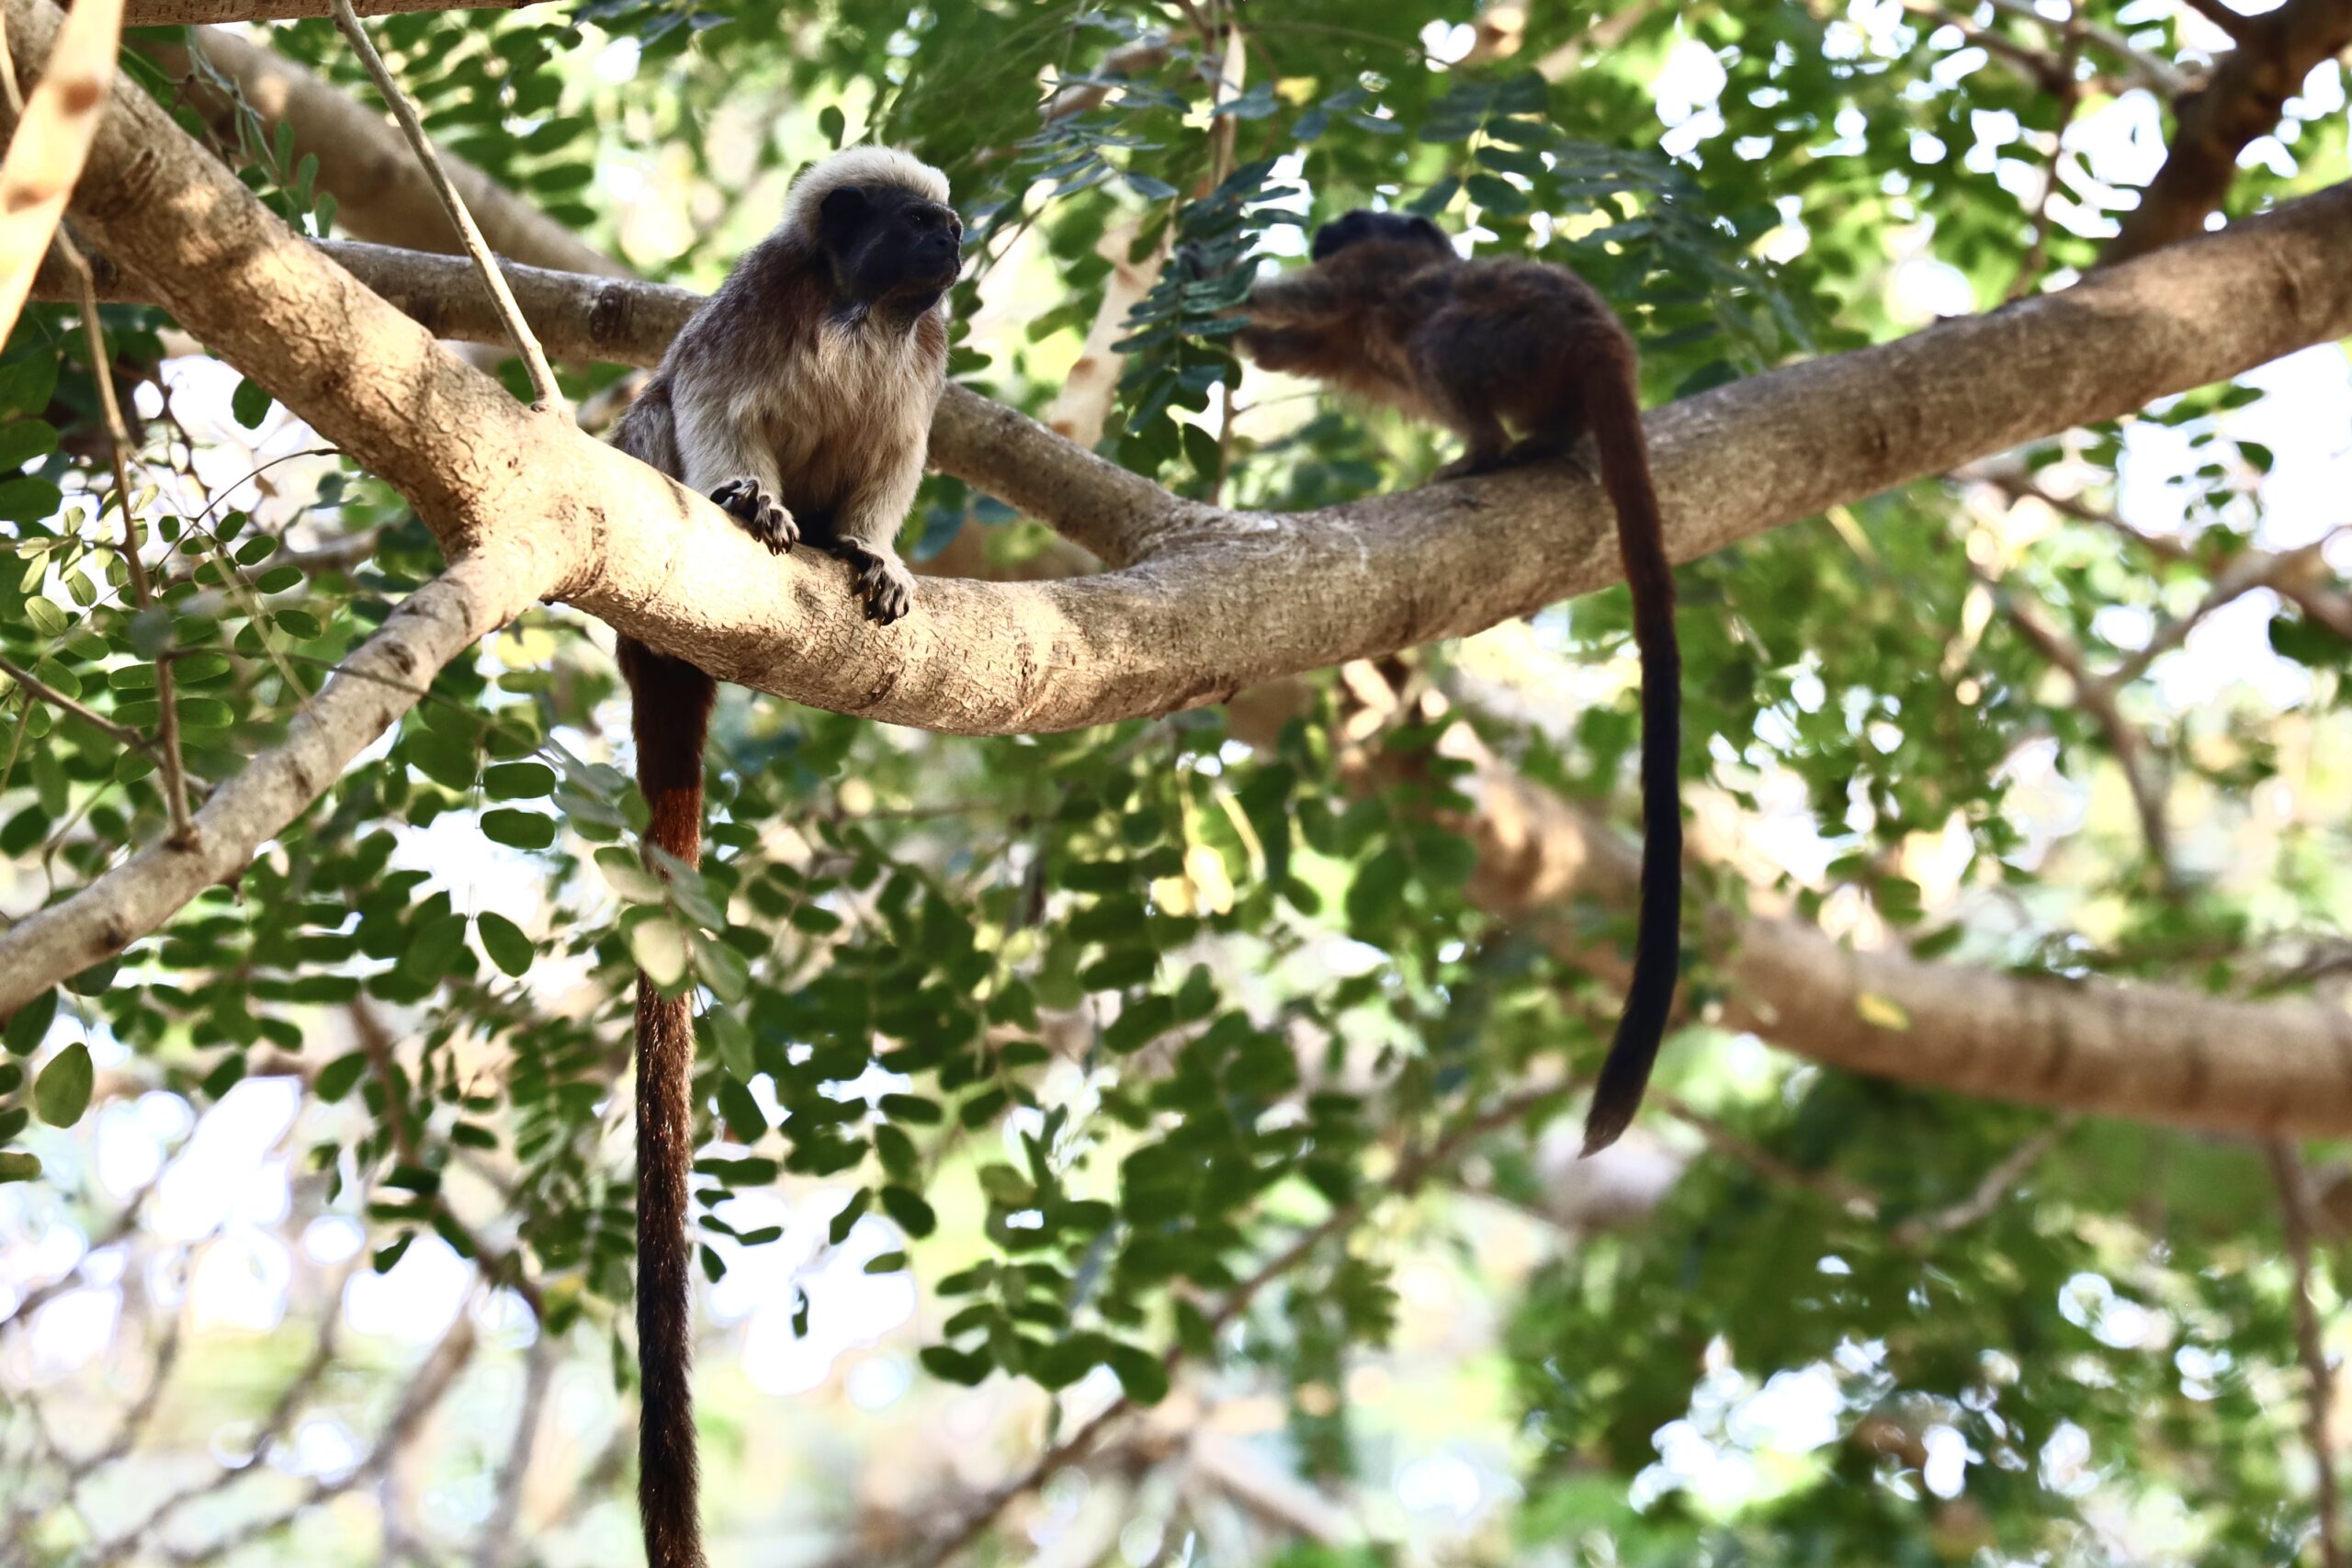 Tamarin monkeys in Cartagena, Colombia